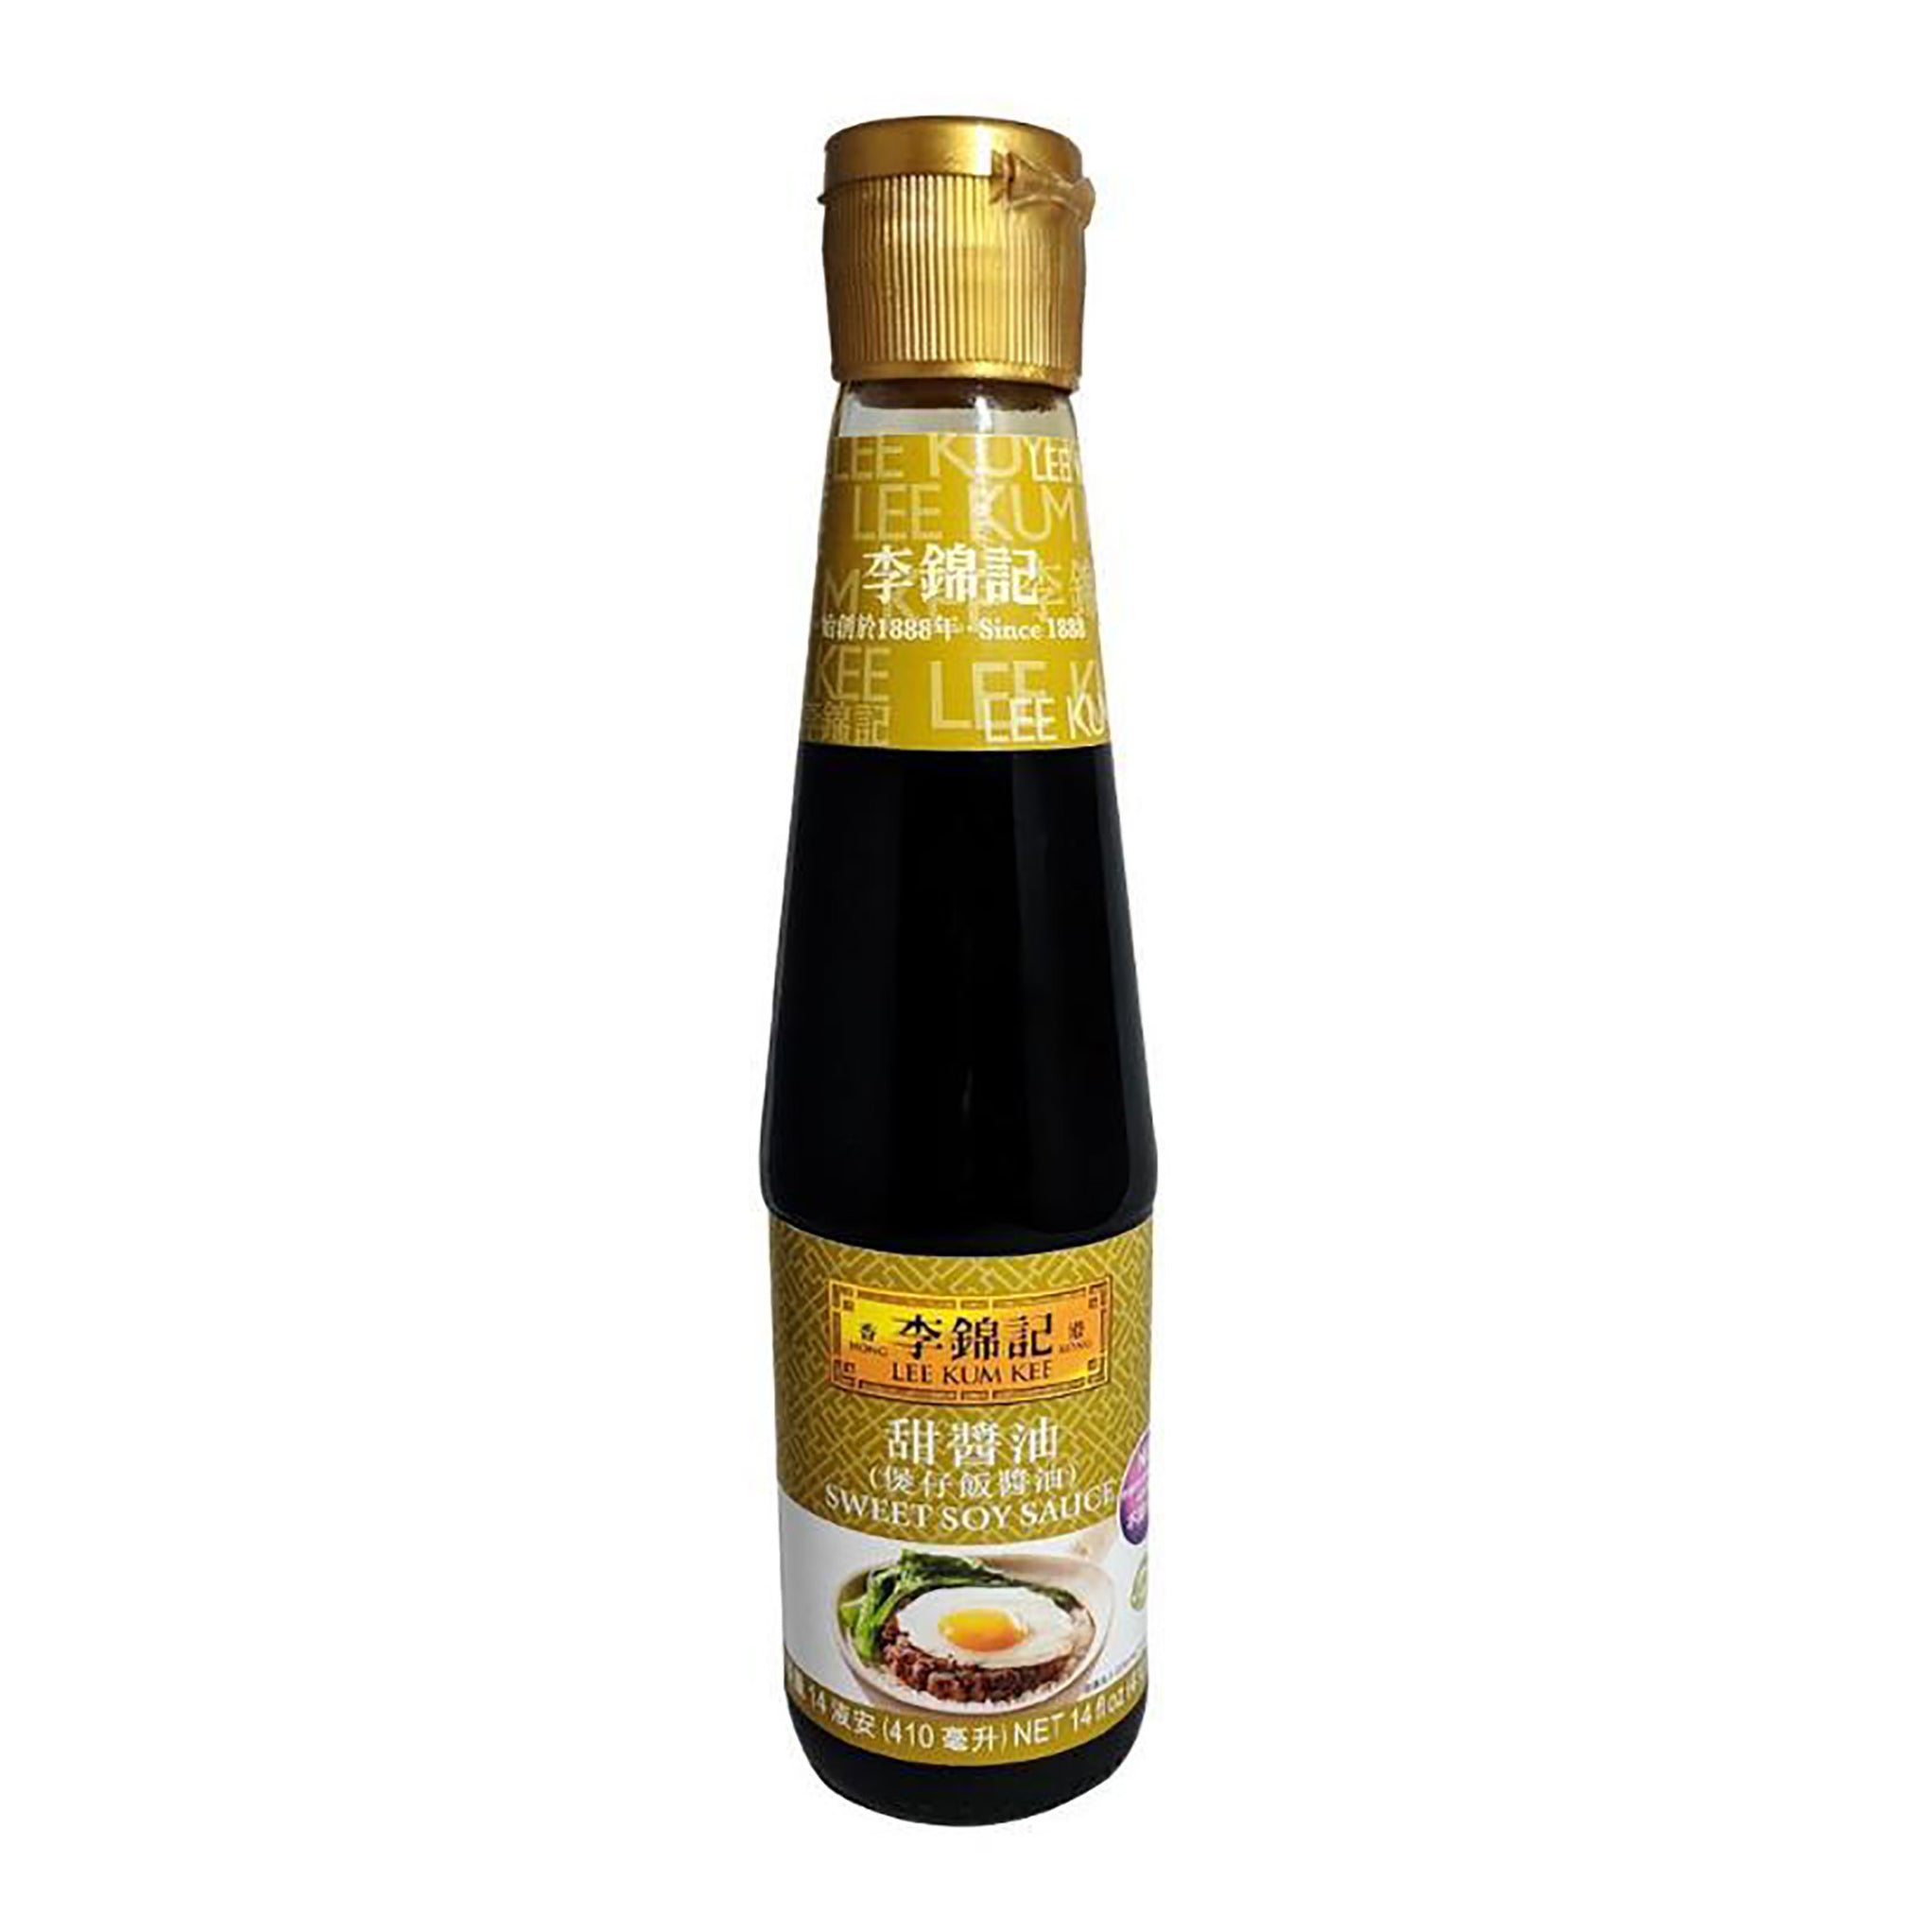 Lee Kum Kee Sweet Soy Sauce 14 oz - Just Asian Food